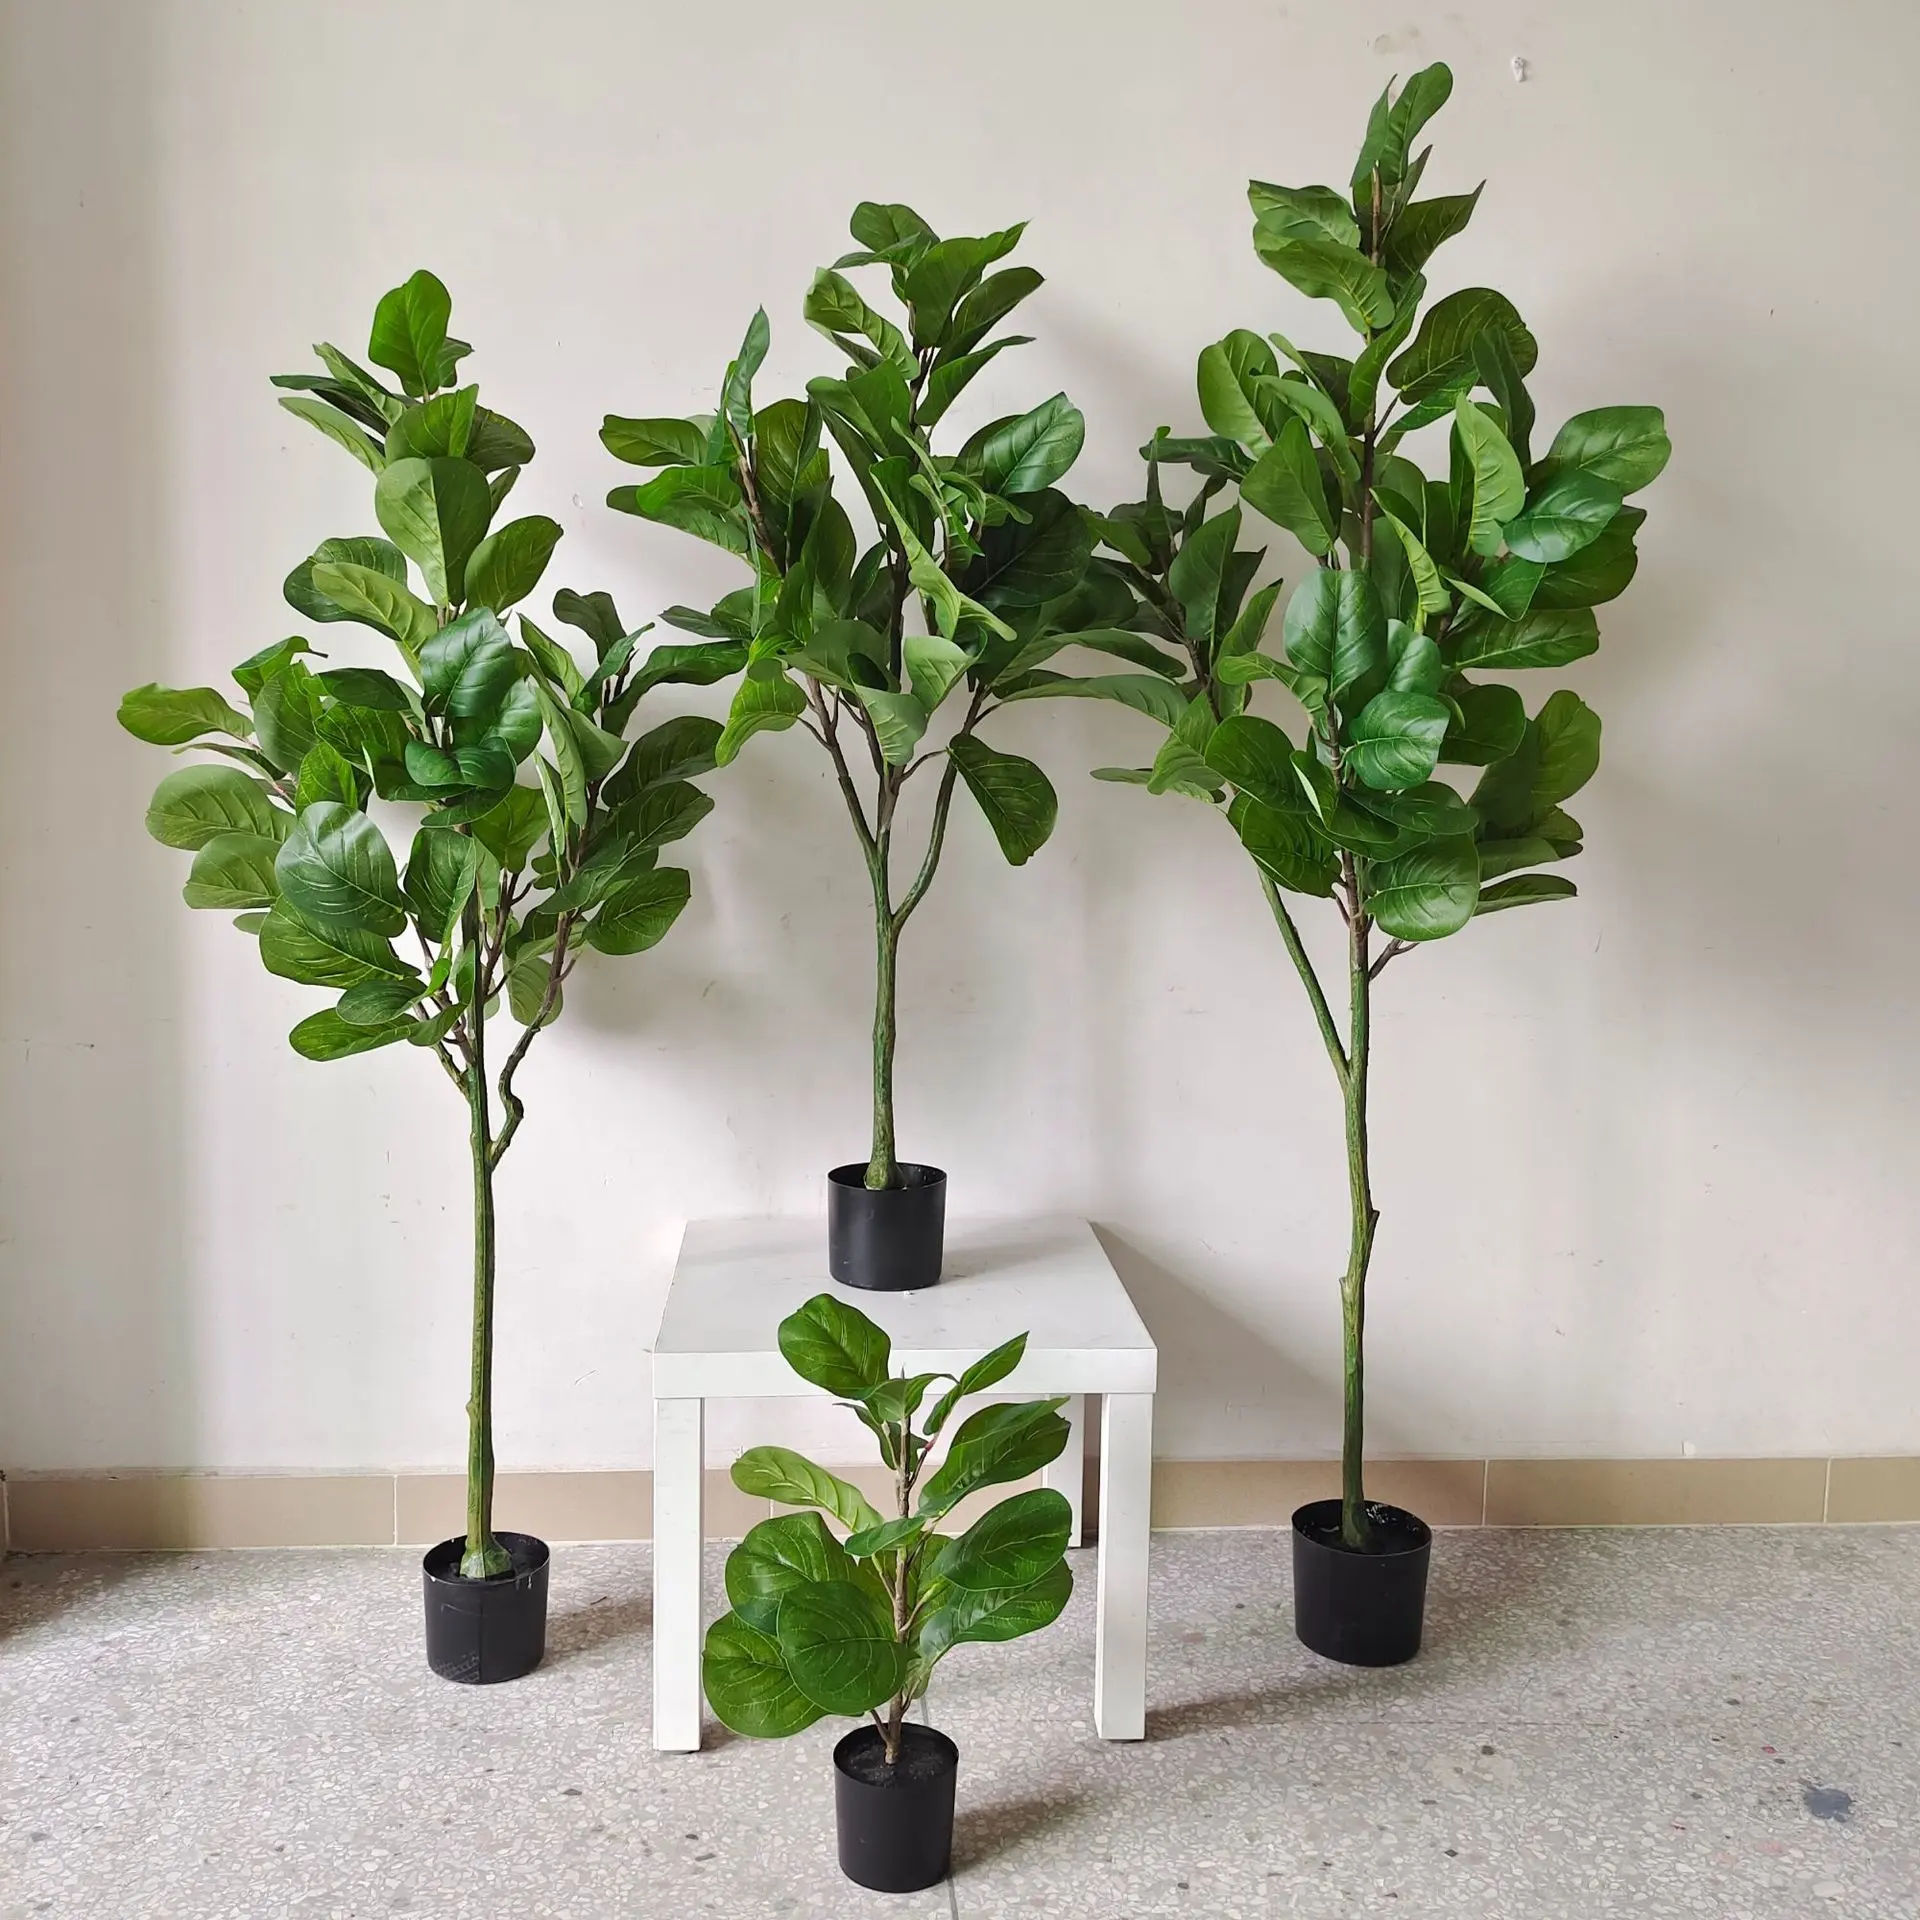 W-245 Artificial plant Tree home decor bonsai tree plastic plants pots garden landscaping modern woody plants indoor plam